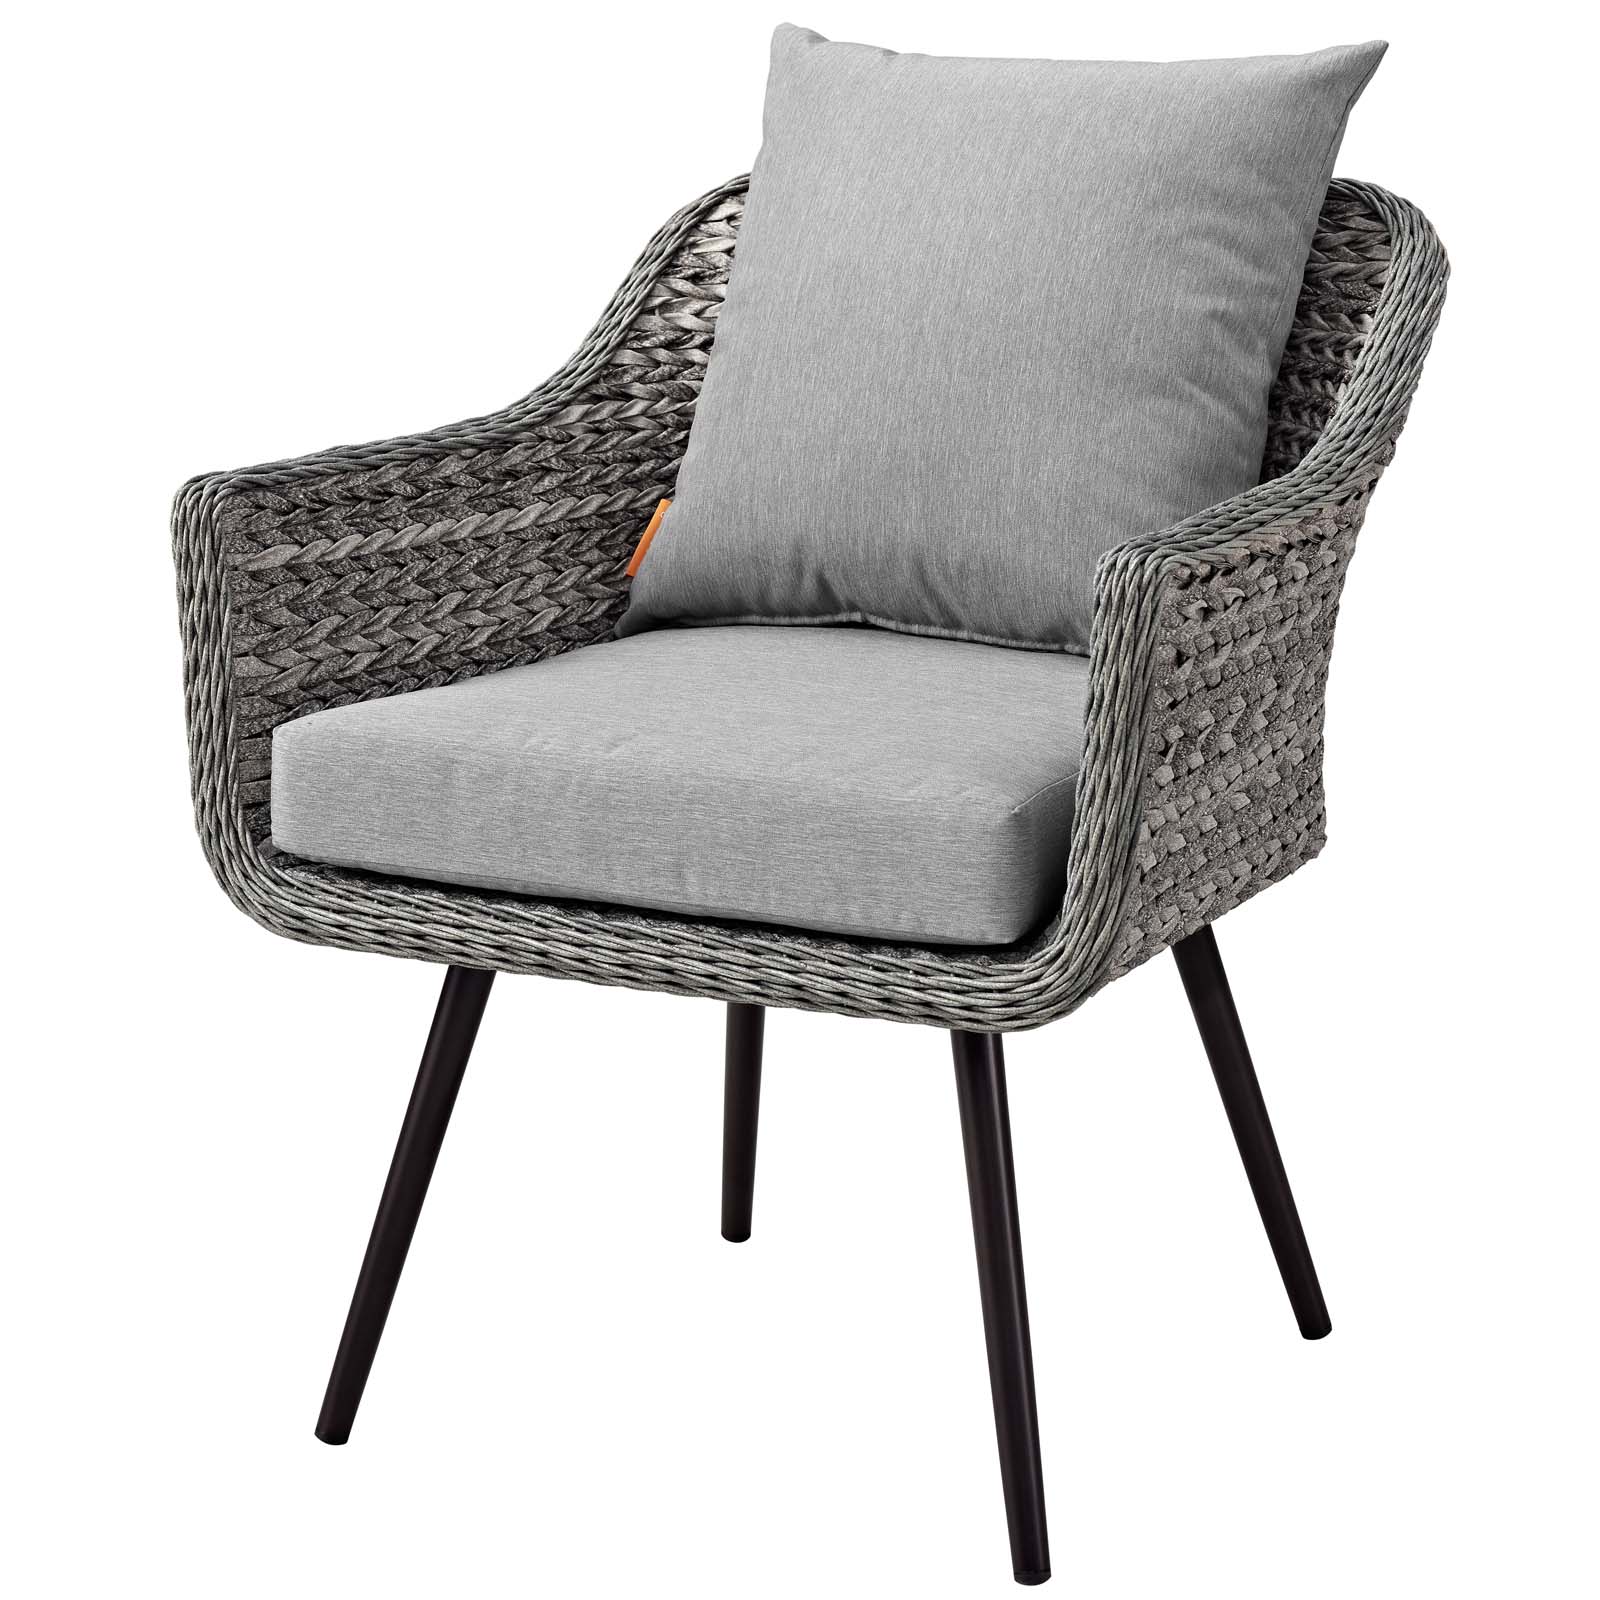 Contemporary Modern Urban Designer Outdoor Patio Balcony Garden Furniture Lounge Sofa and Chair Set, Aluminum Fabric Wicker Rattan, Grey Gray - image 4 of 8